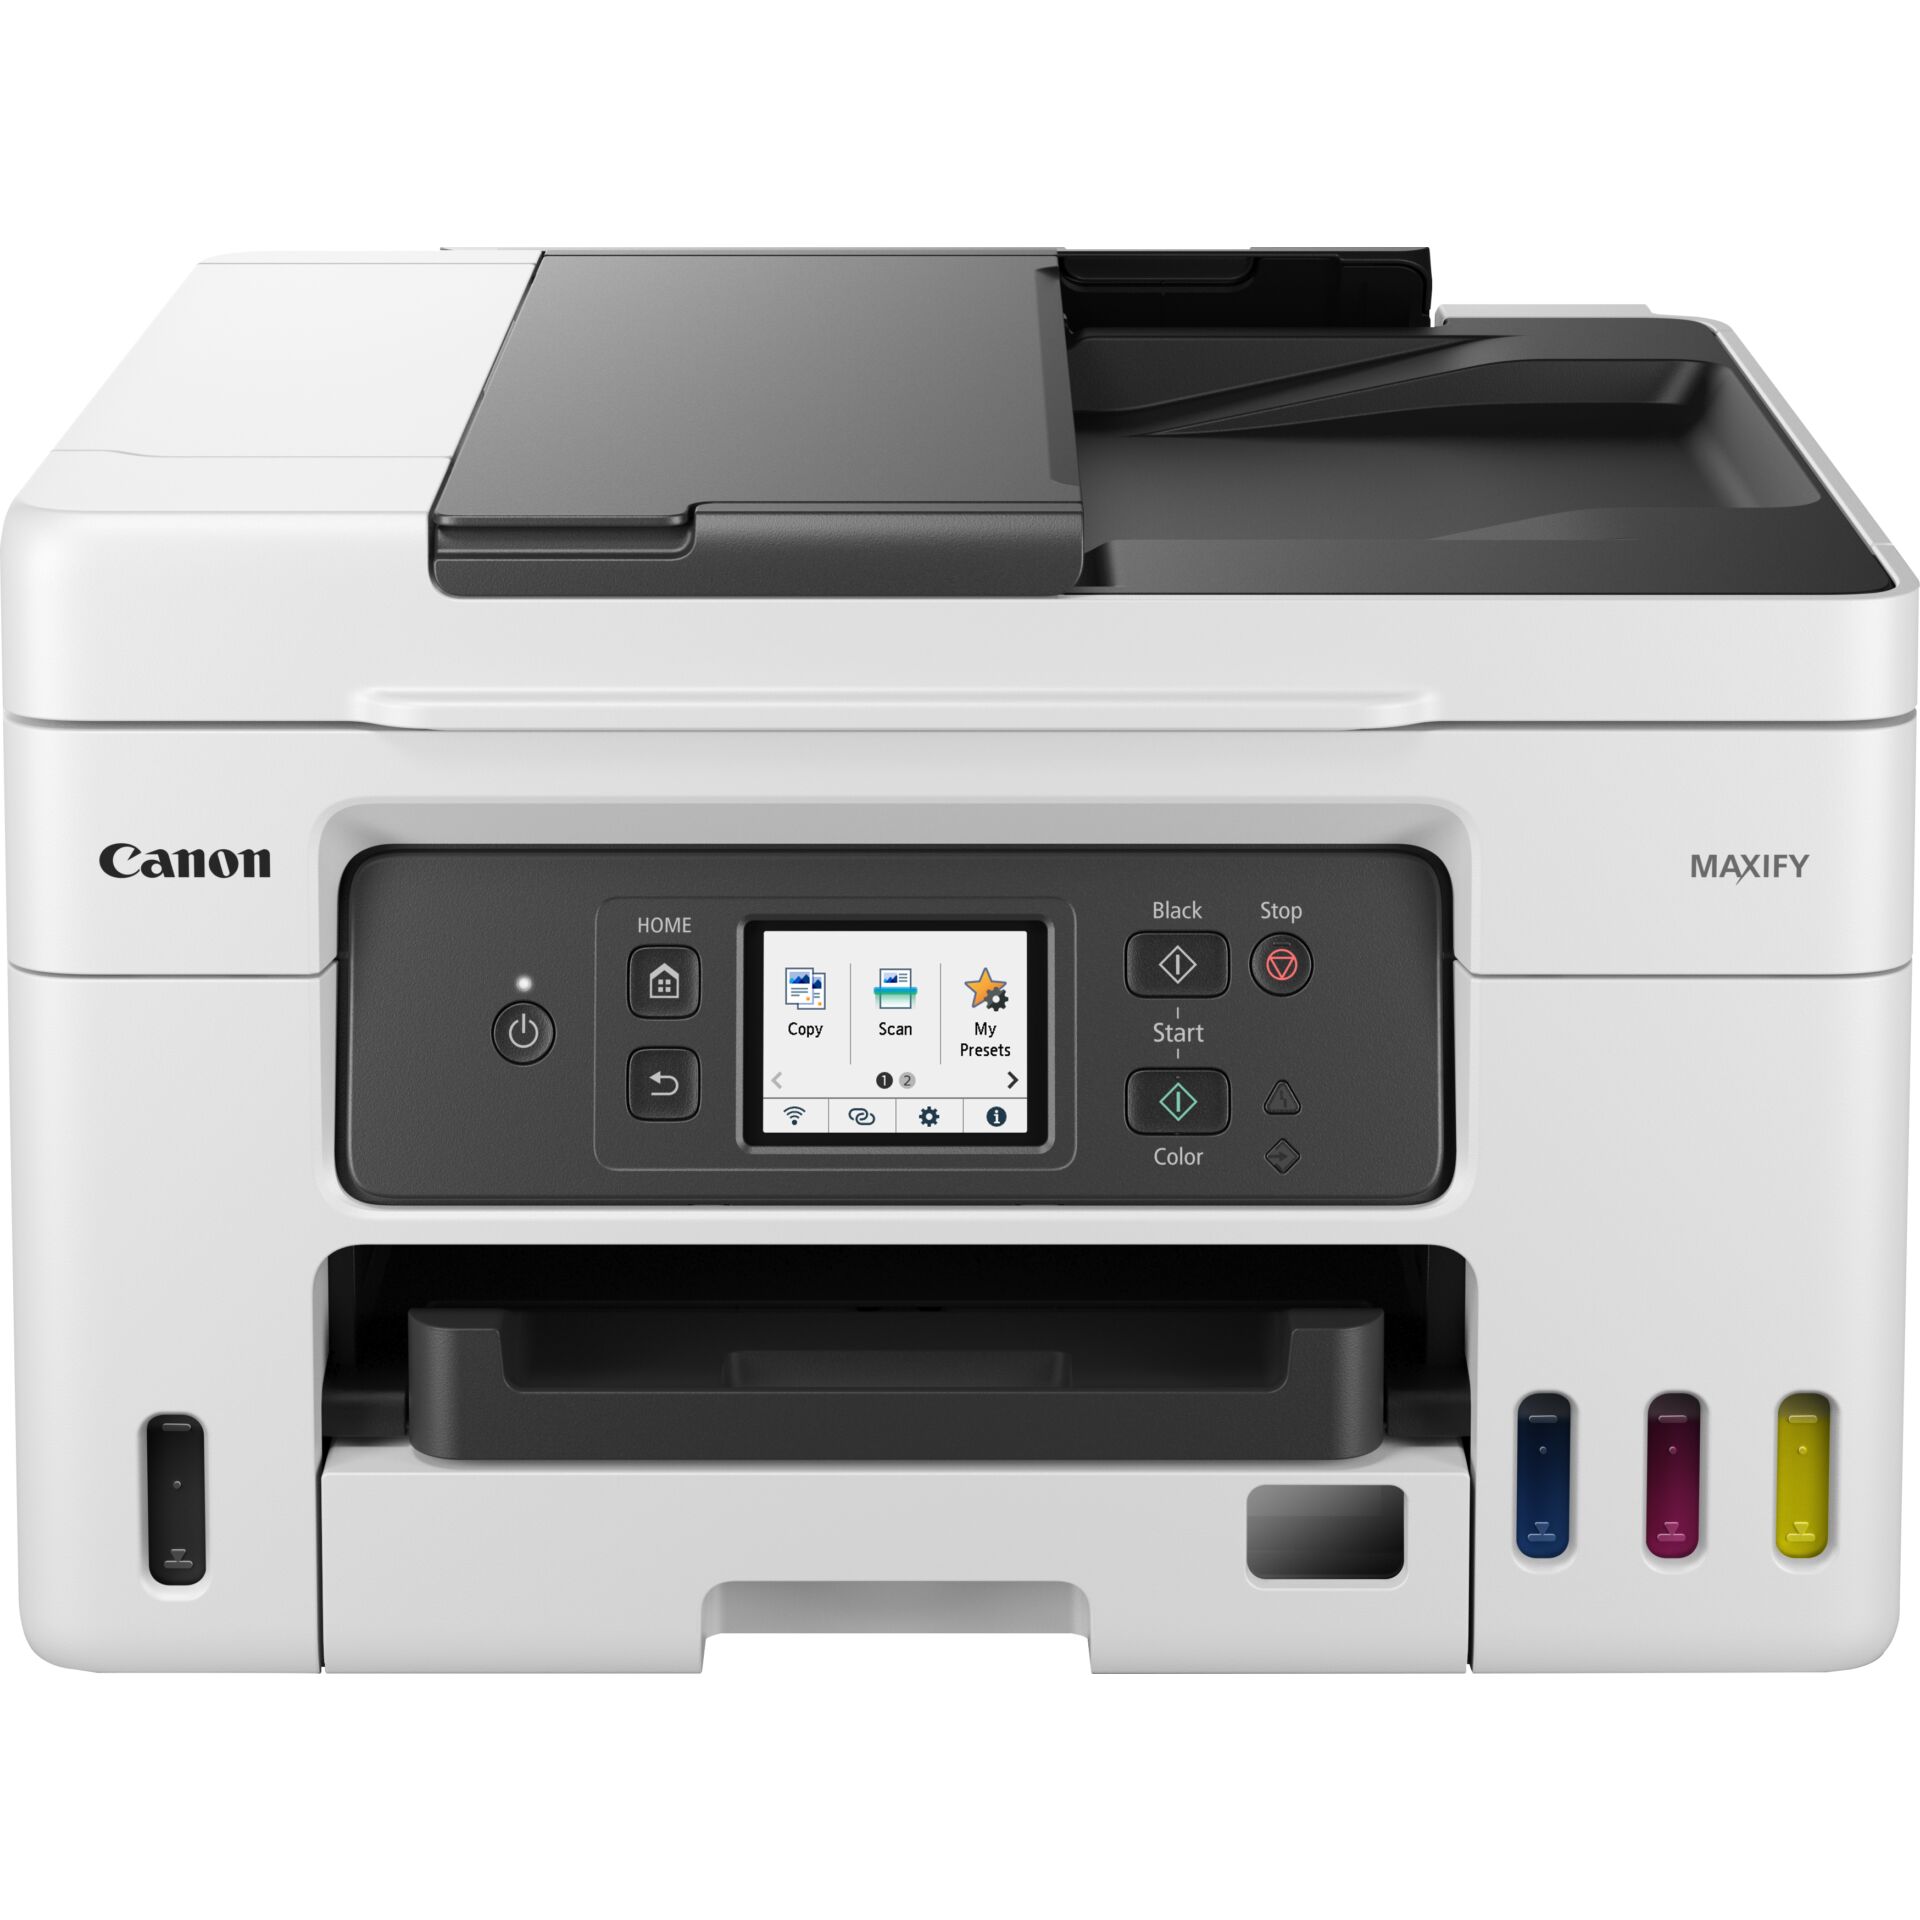 Canon MAXIFY GX4050, WLAN, Tinte, mehrfarbig-Multifunktions- gerät, Drucker/Scanner/Kopierer/Fax